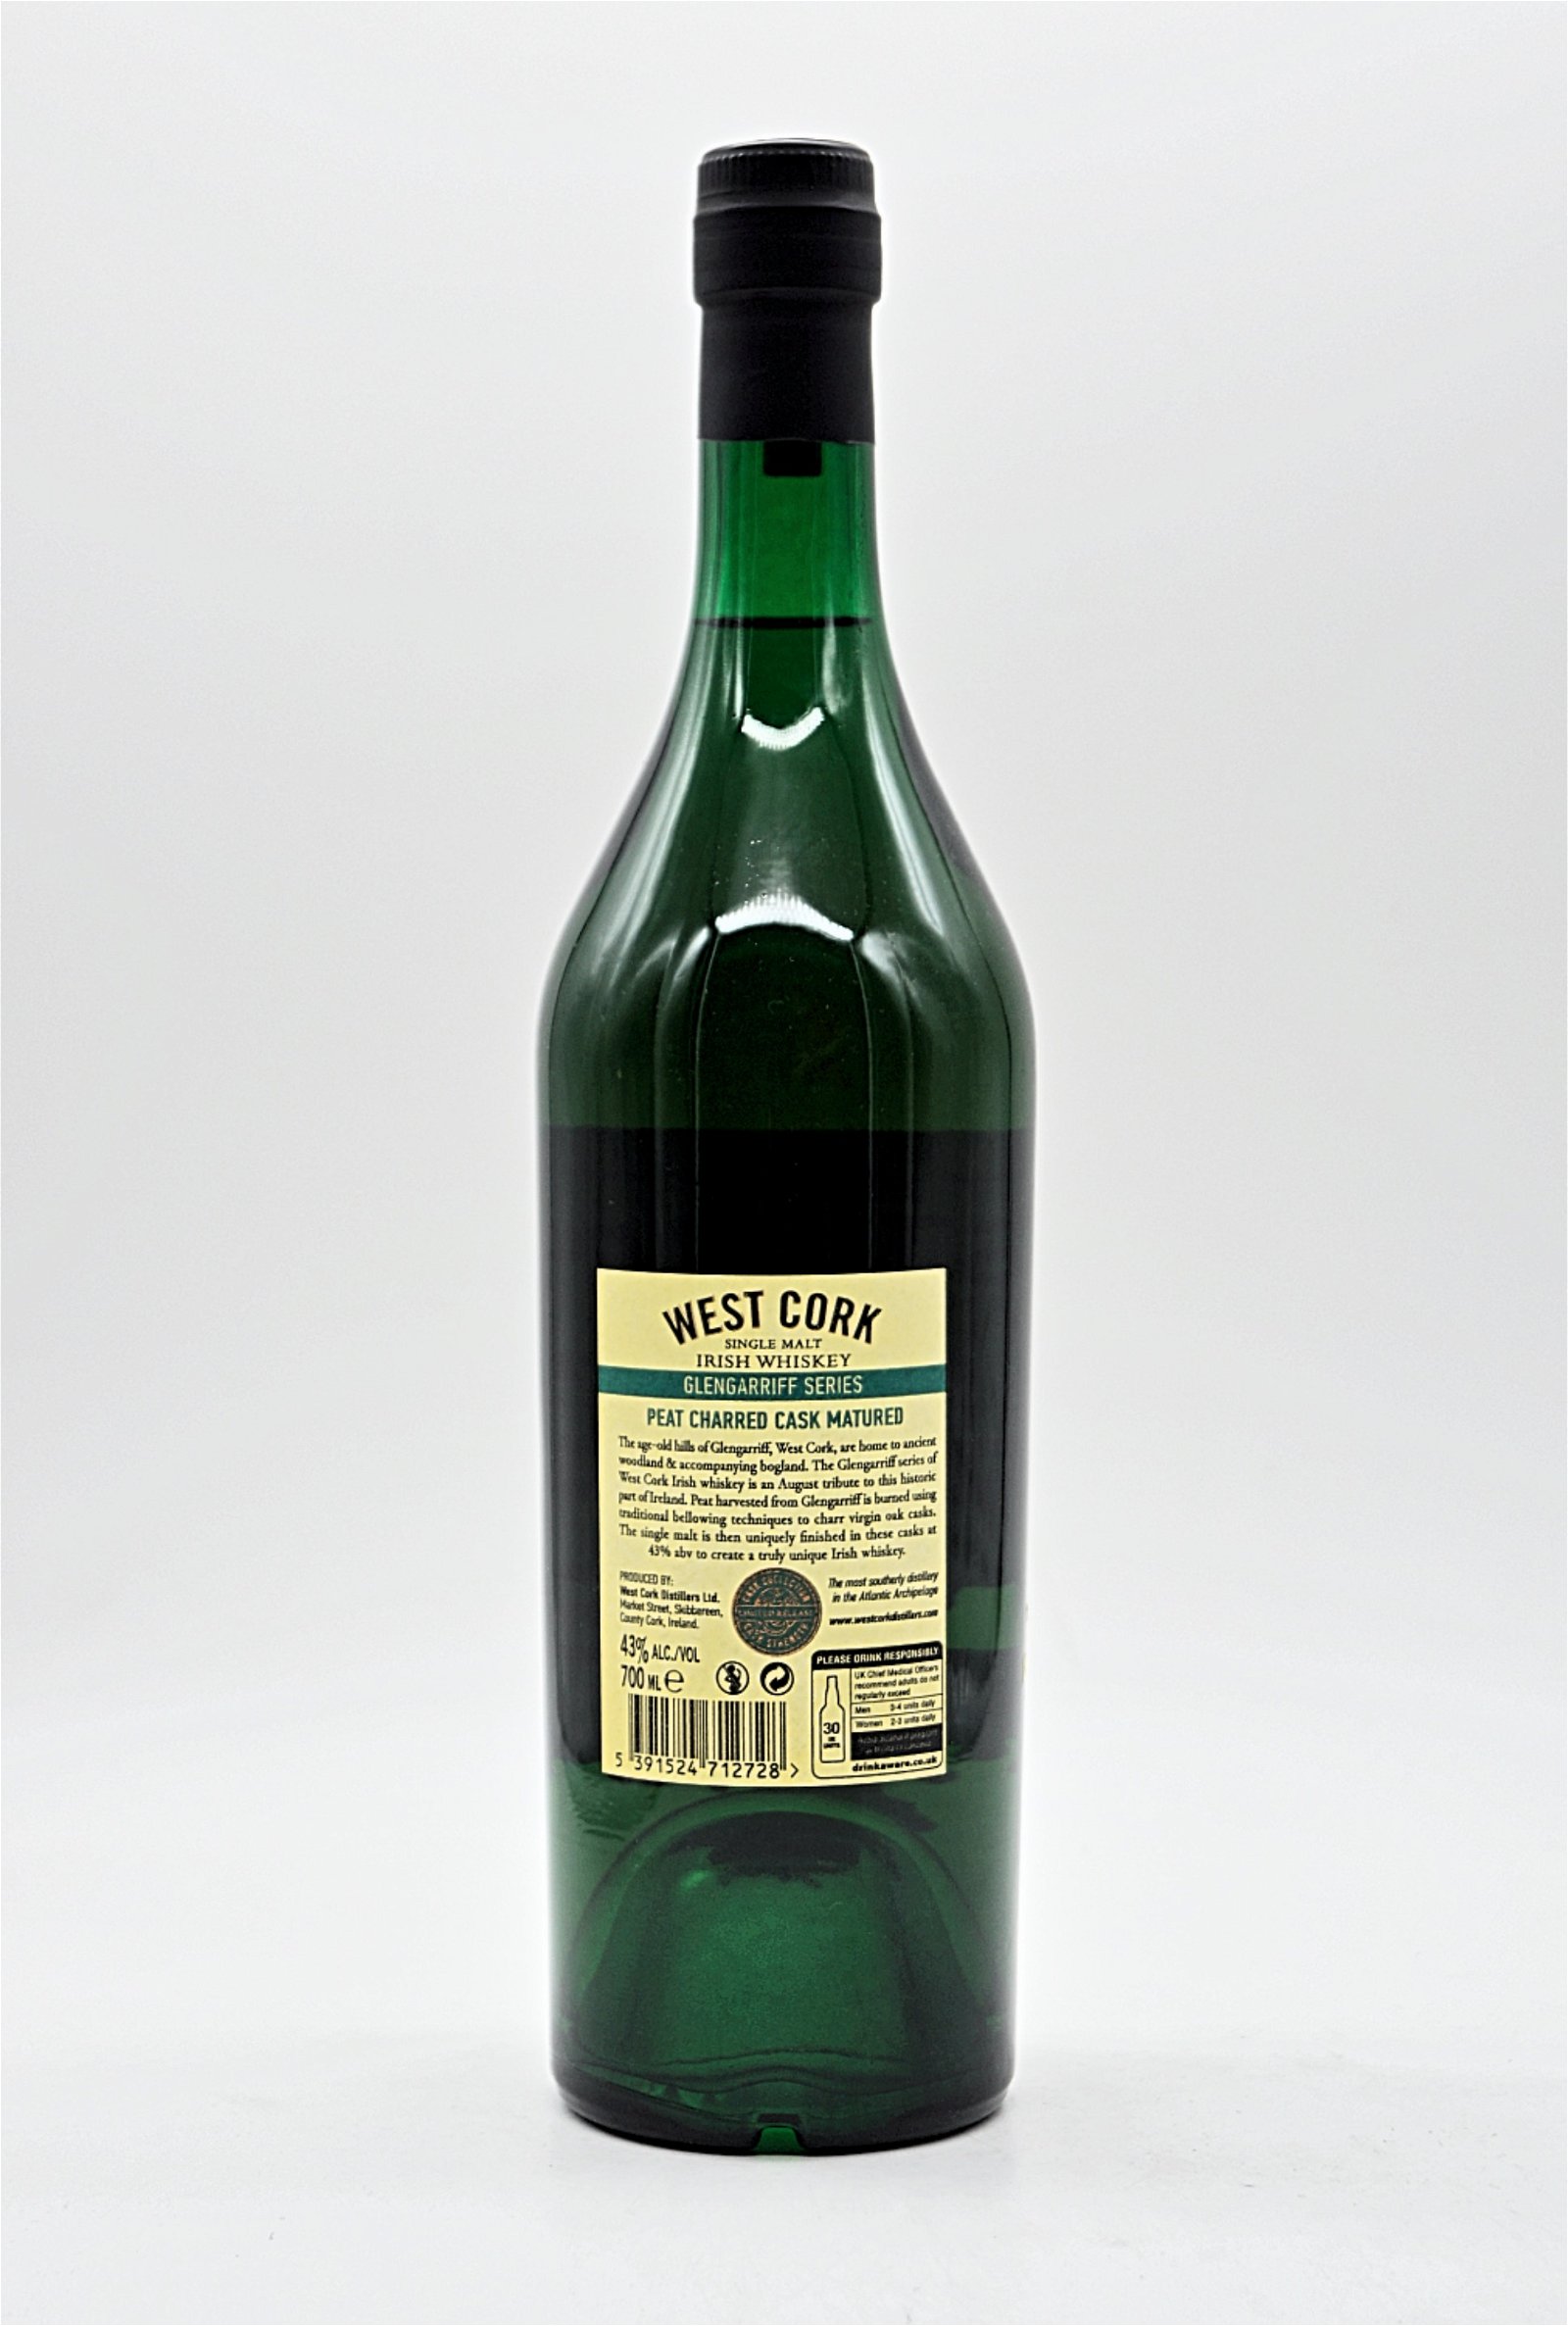 West Cork Glengarriff Series Peat Charred Cask Single Malt Irish Whiskey